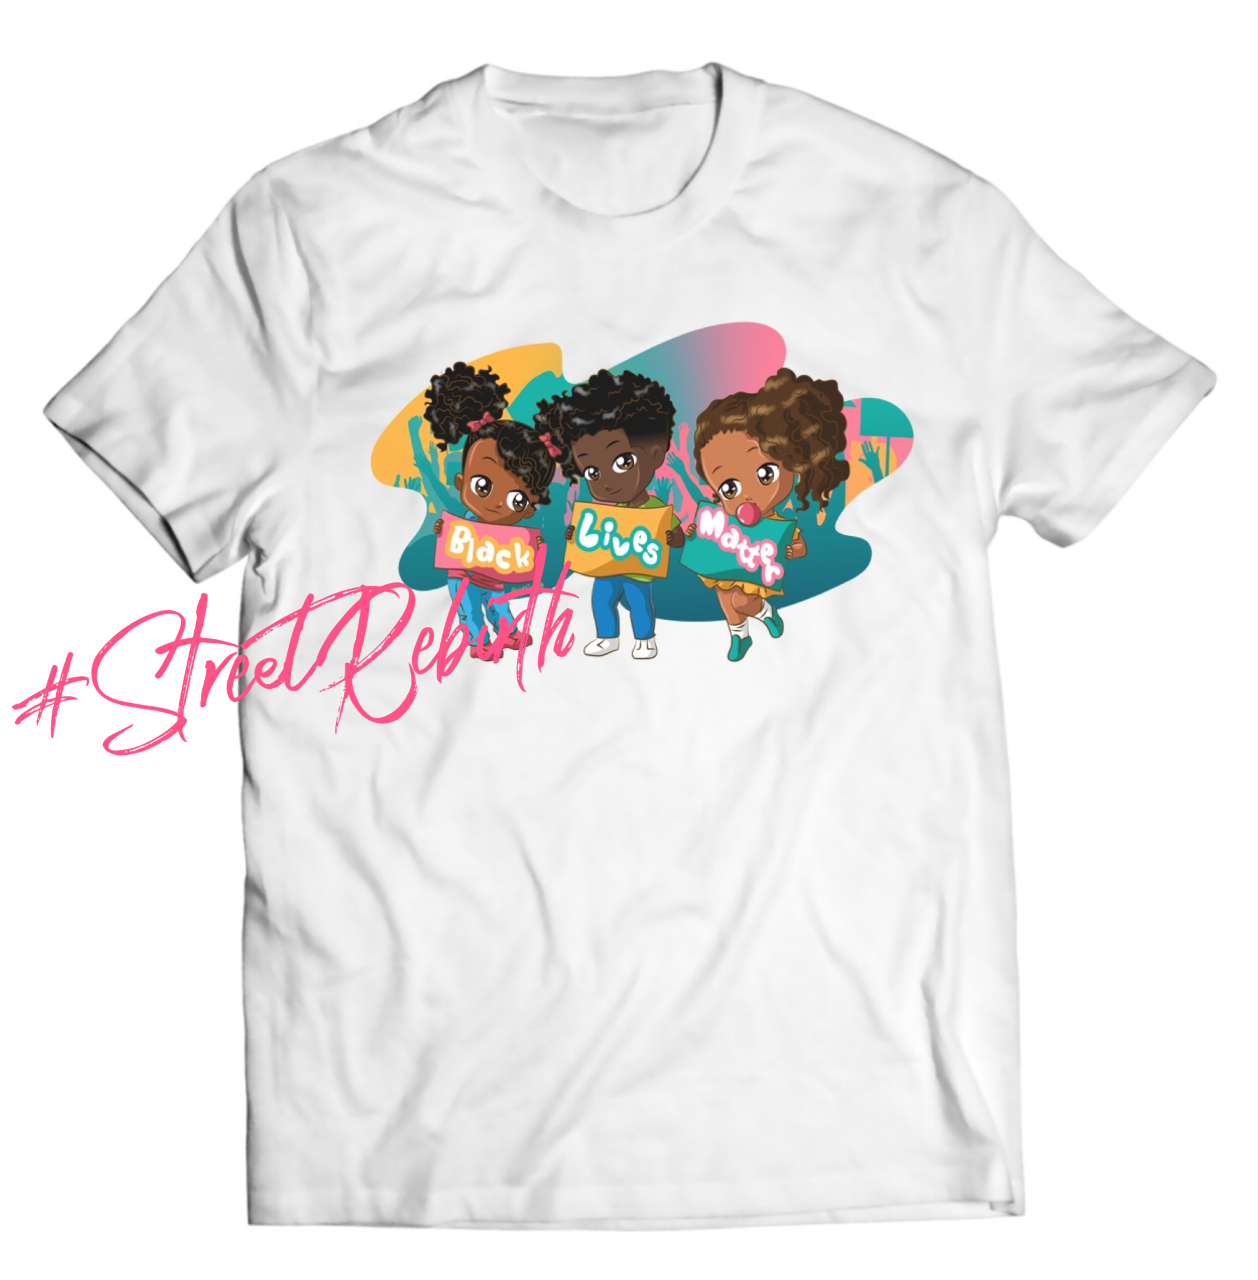 Black Lives Matter Kids Shirt - Direct To Garment Quality Print - Unisex Shirt - Gift For Him or Her